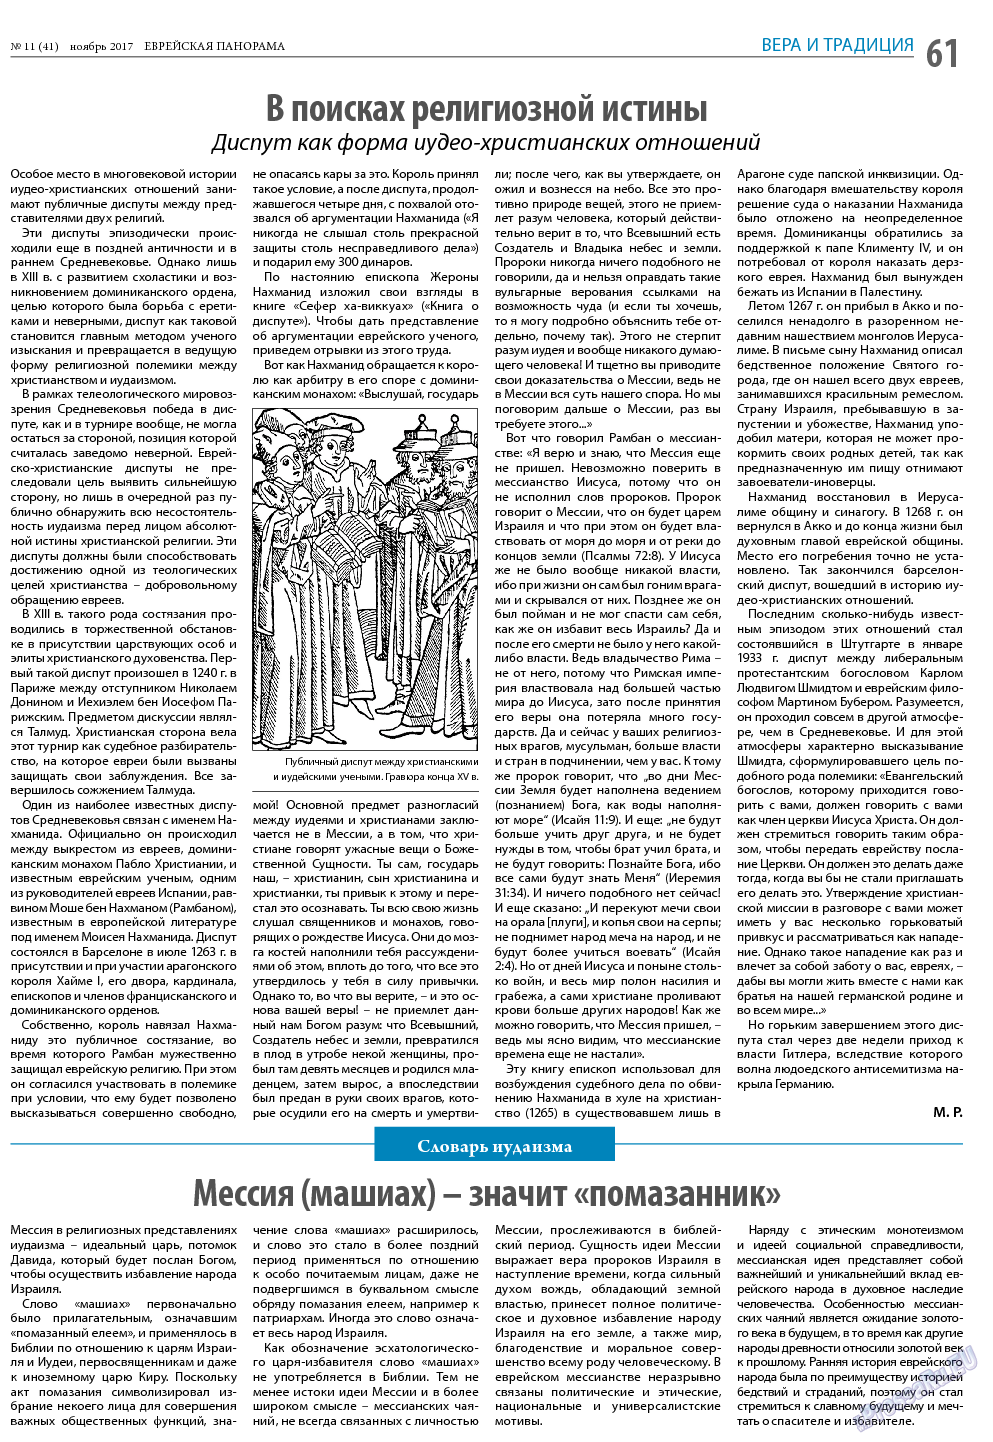 Еврейская панорама, газета. 2017 №11 стр.61